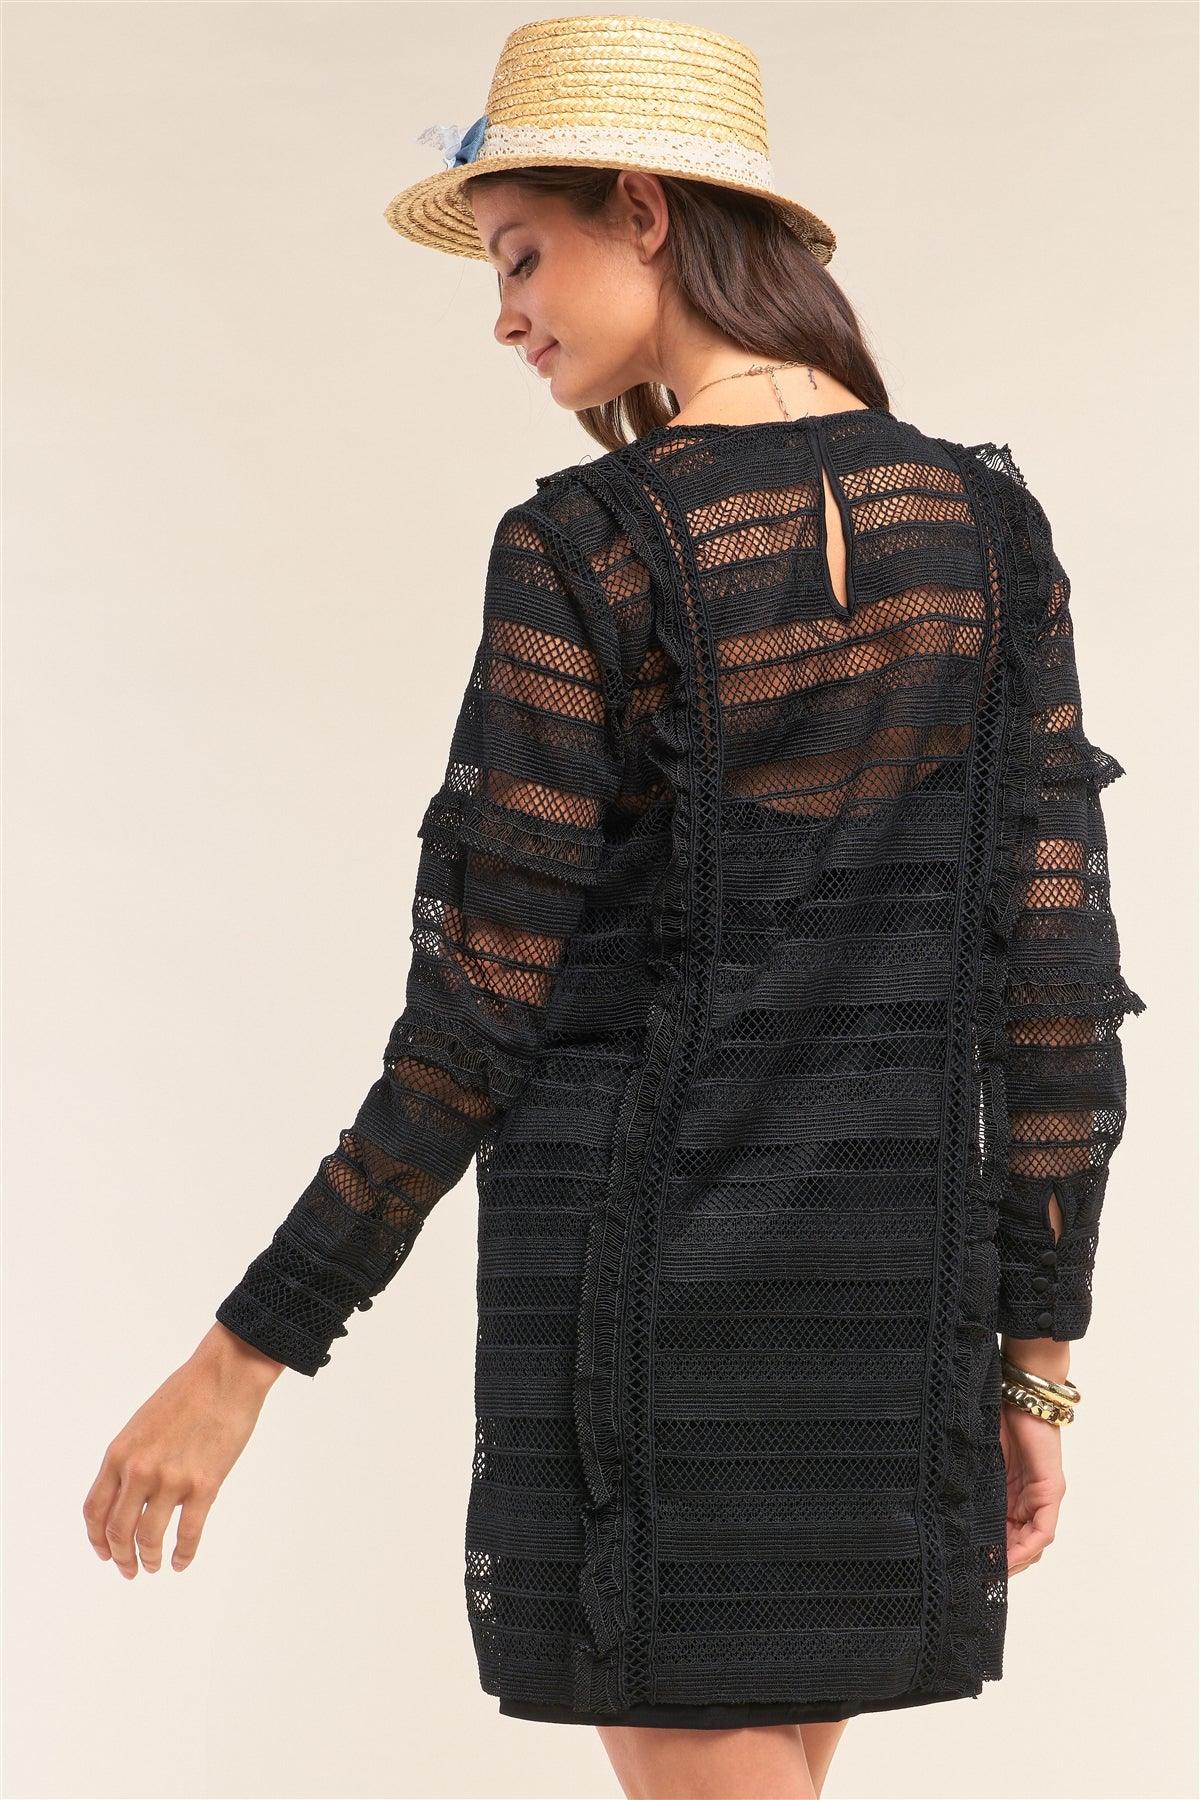 Black Crochet Lace Mesh Crew Neck Long Sleeve Frill Trim Detail Mini Dress /2-2-1